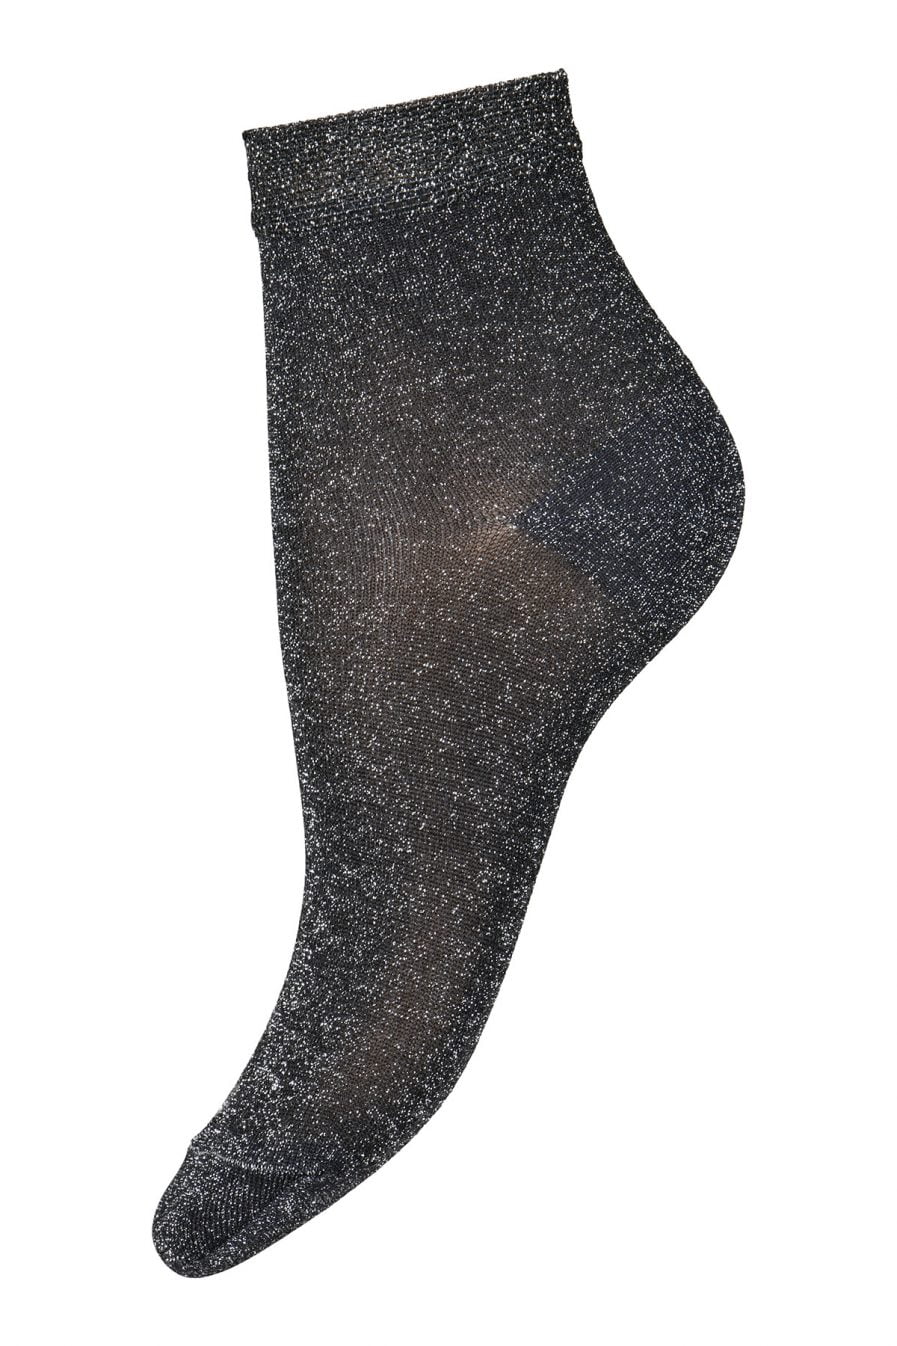 Socks "Pi glitter Black"